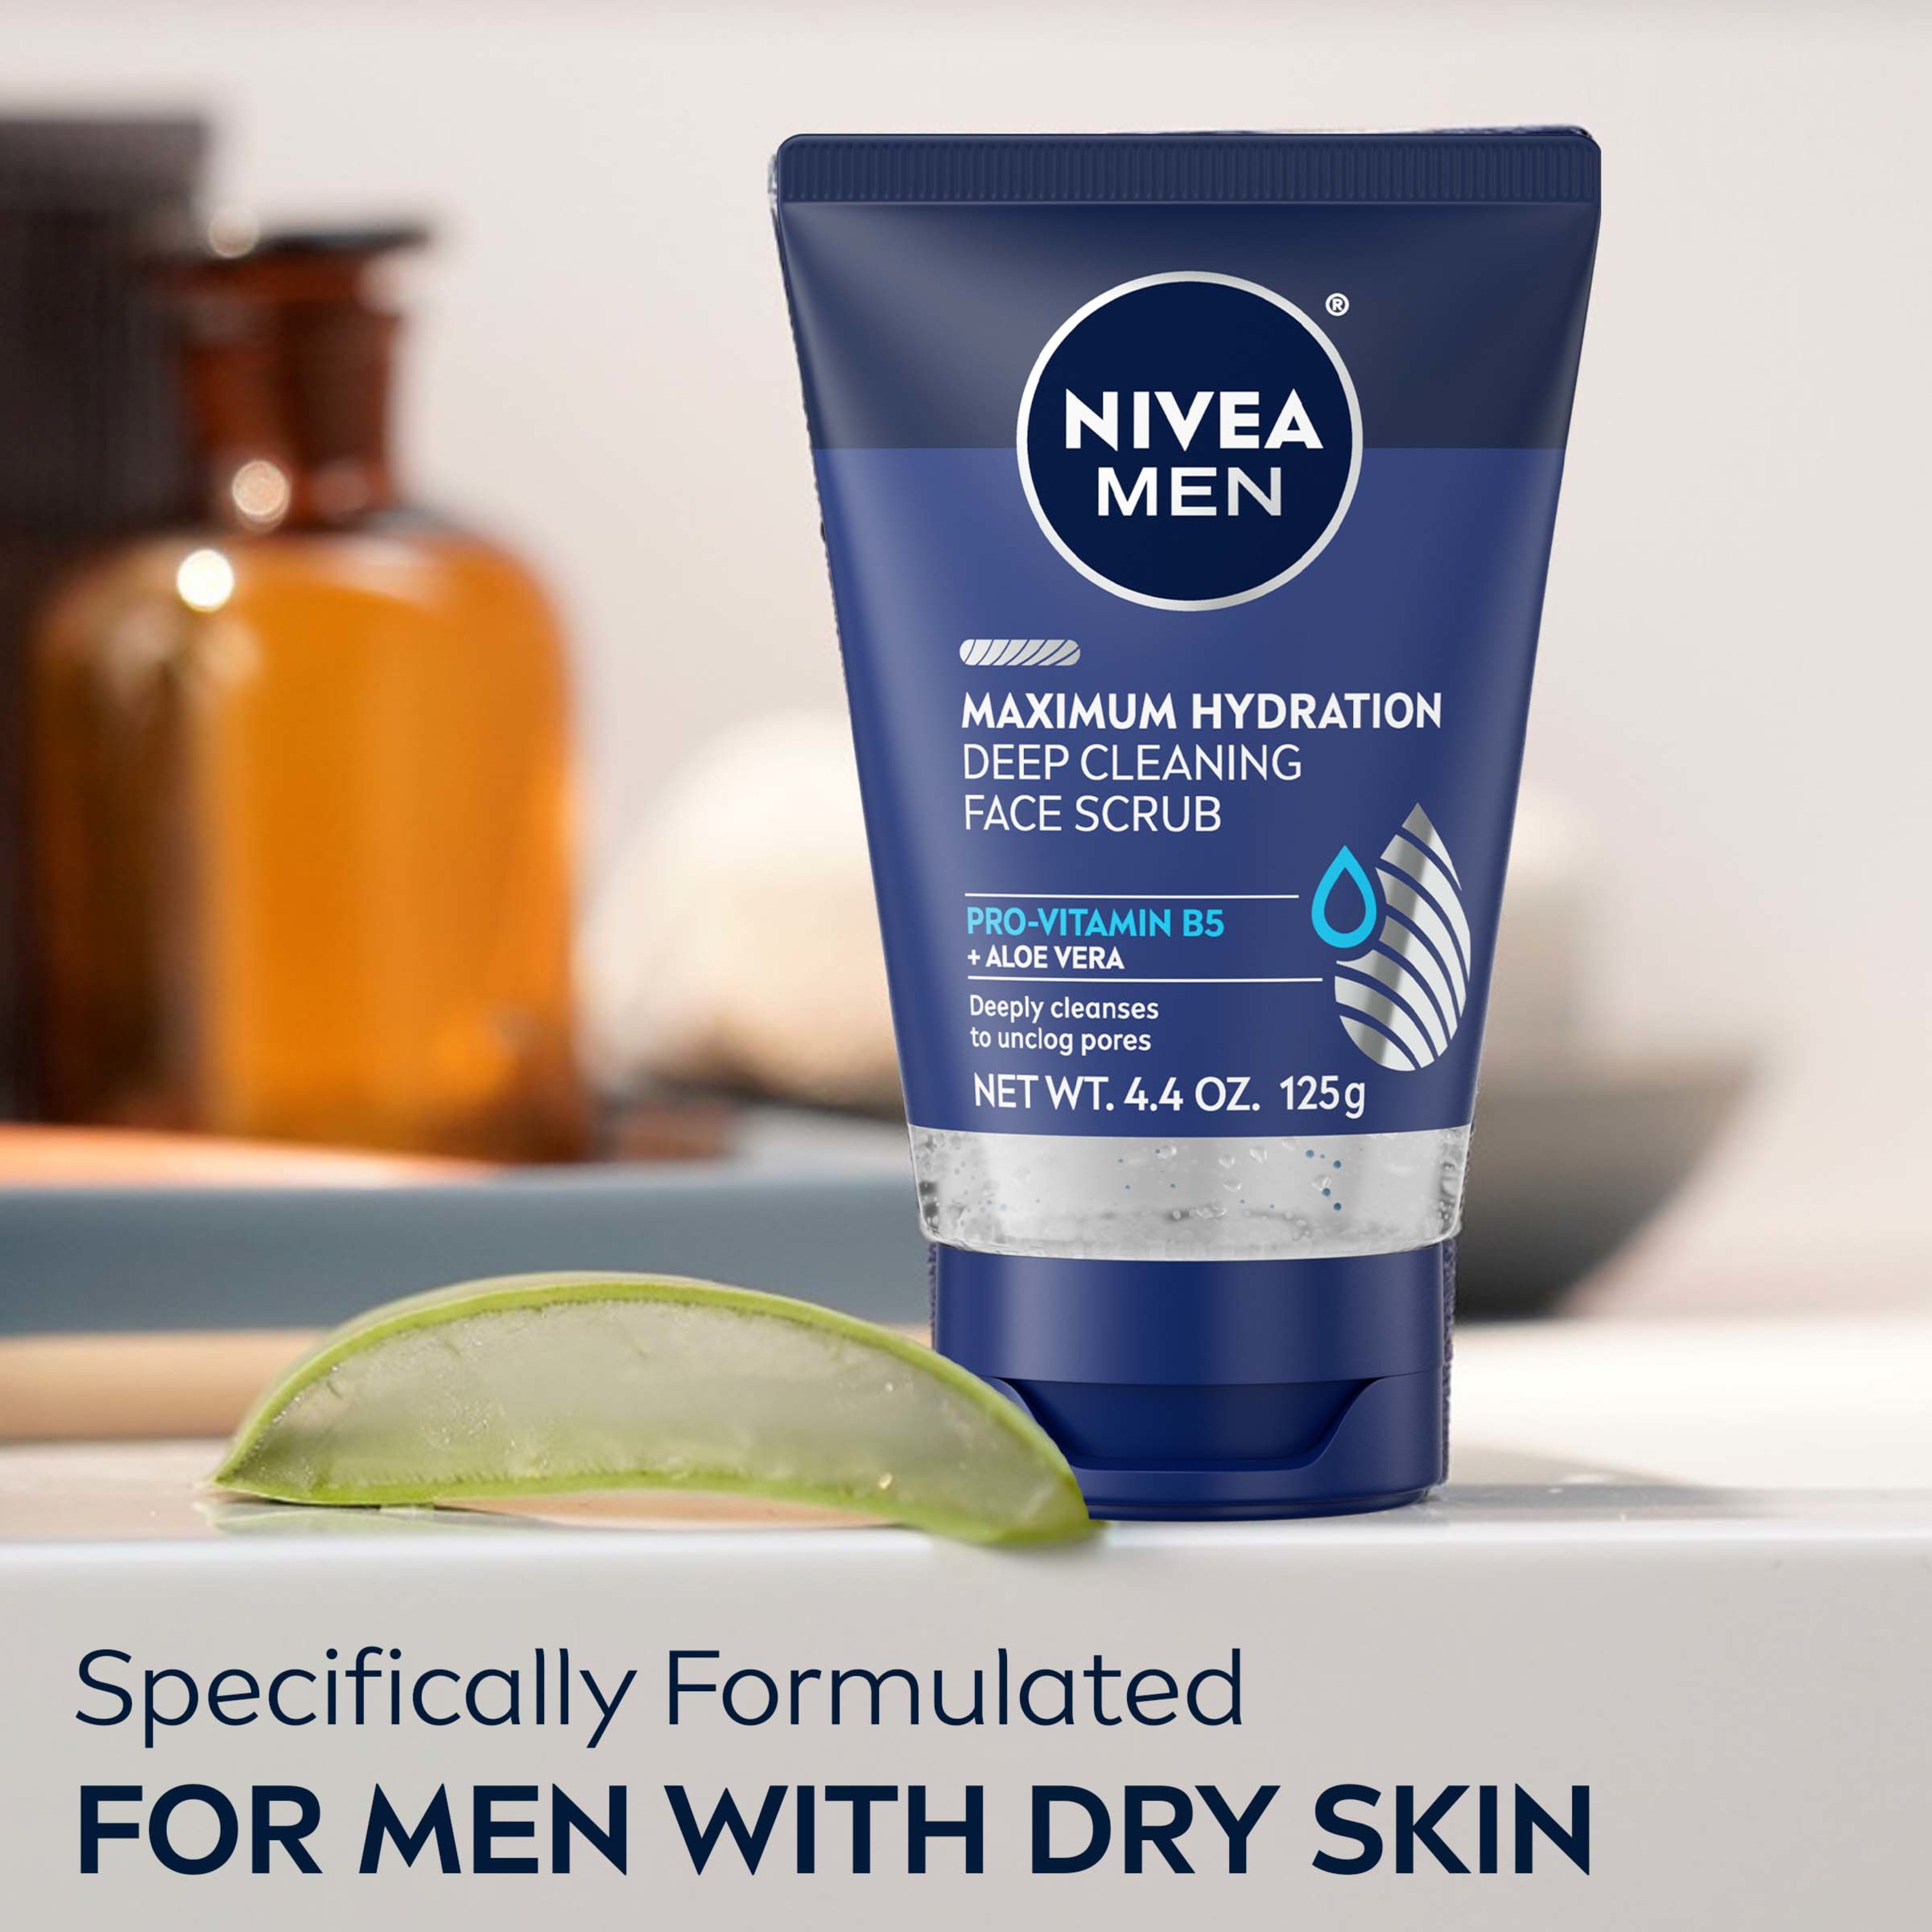 NIVEA MEN Maximum Hydration Deep Cleaning Face Scrub with Aloe Vera, 4.4 Oz Tube - image 5 of 13